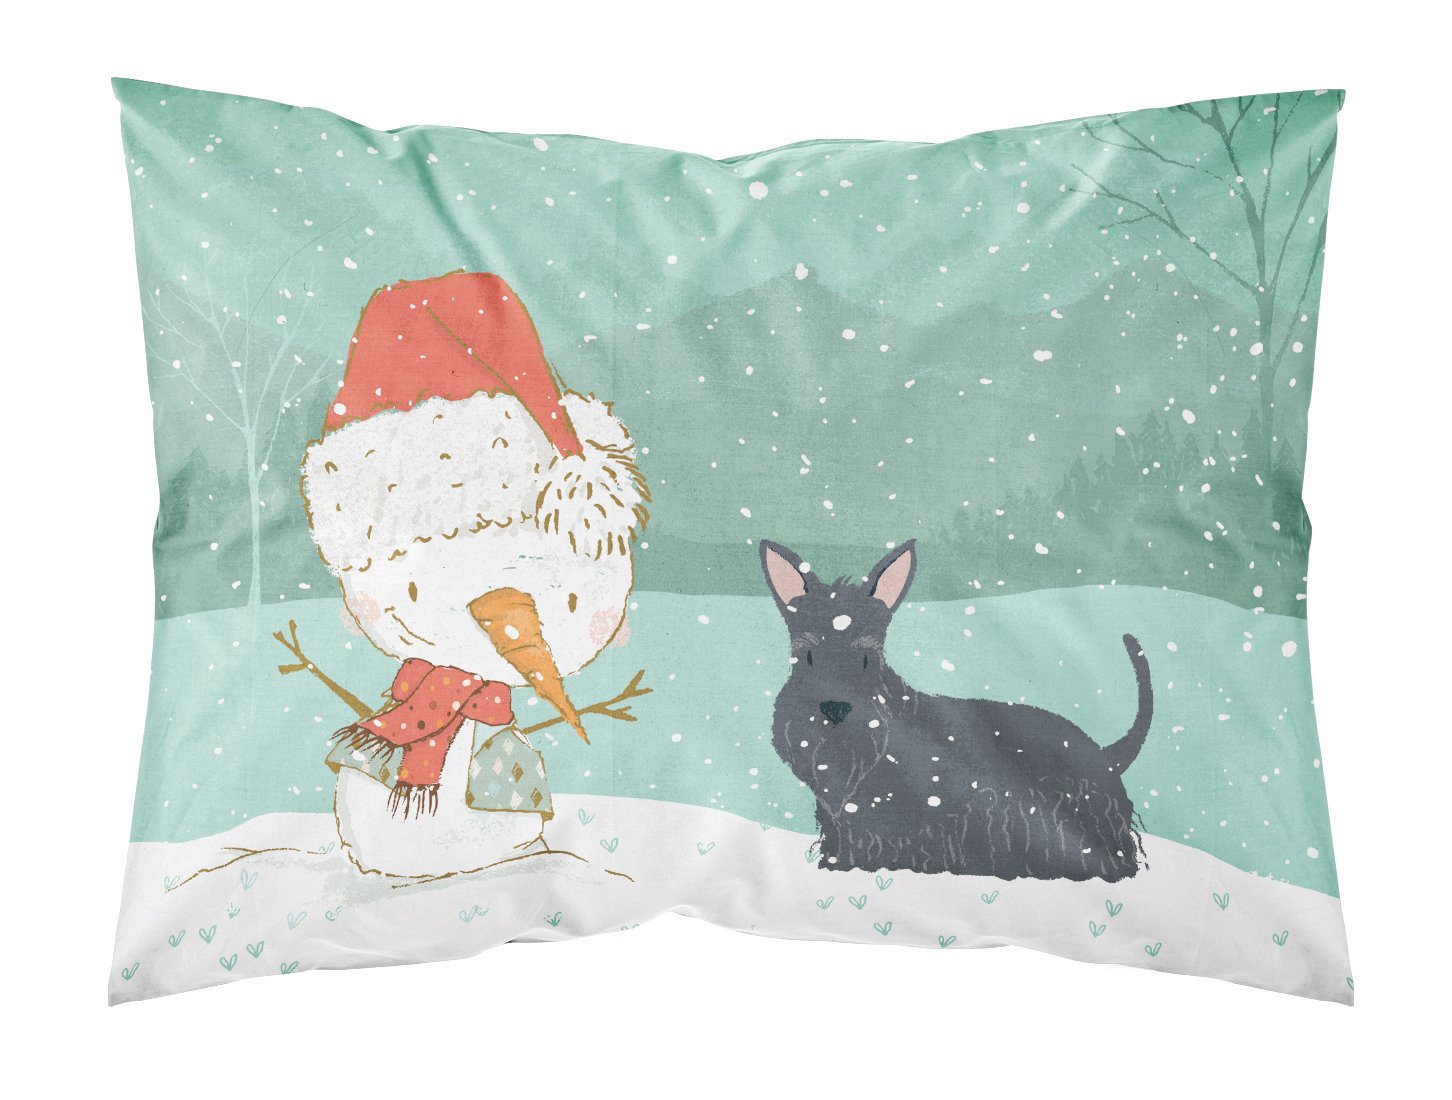 Scottish Terrier Snowman Christmas Fabric Standard Pillowcase CK2068PILLOWCASE by Caroline's Treasures